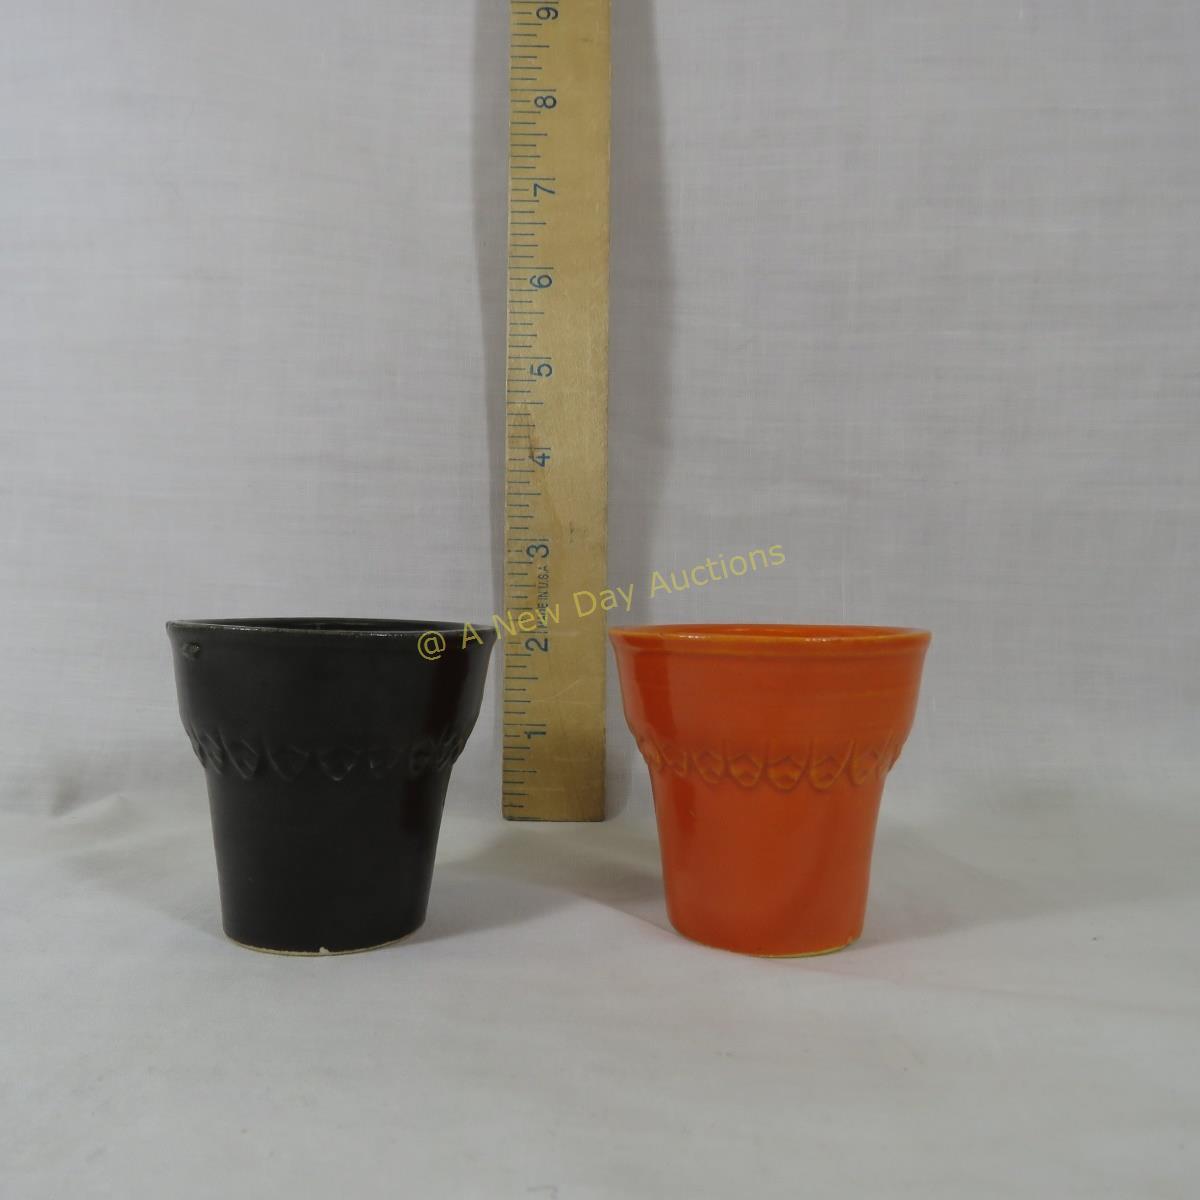 2 Red Wing sales sample flower pots 2.25"